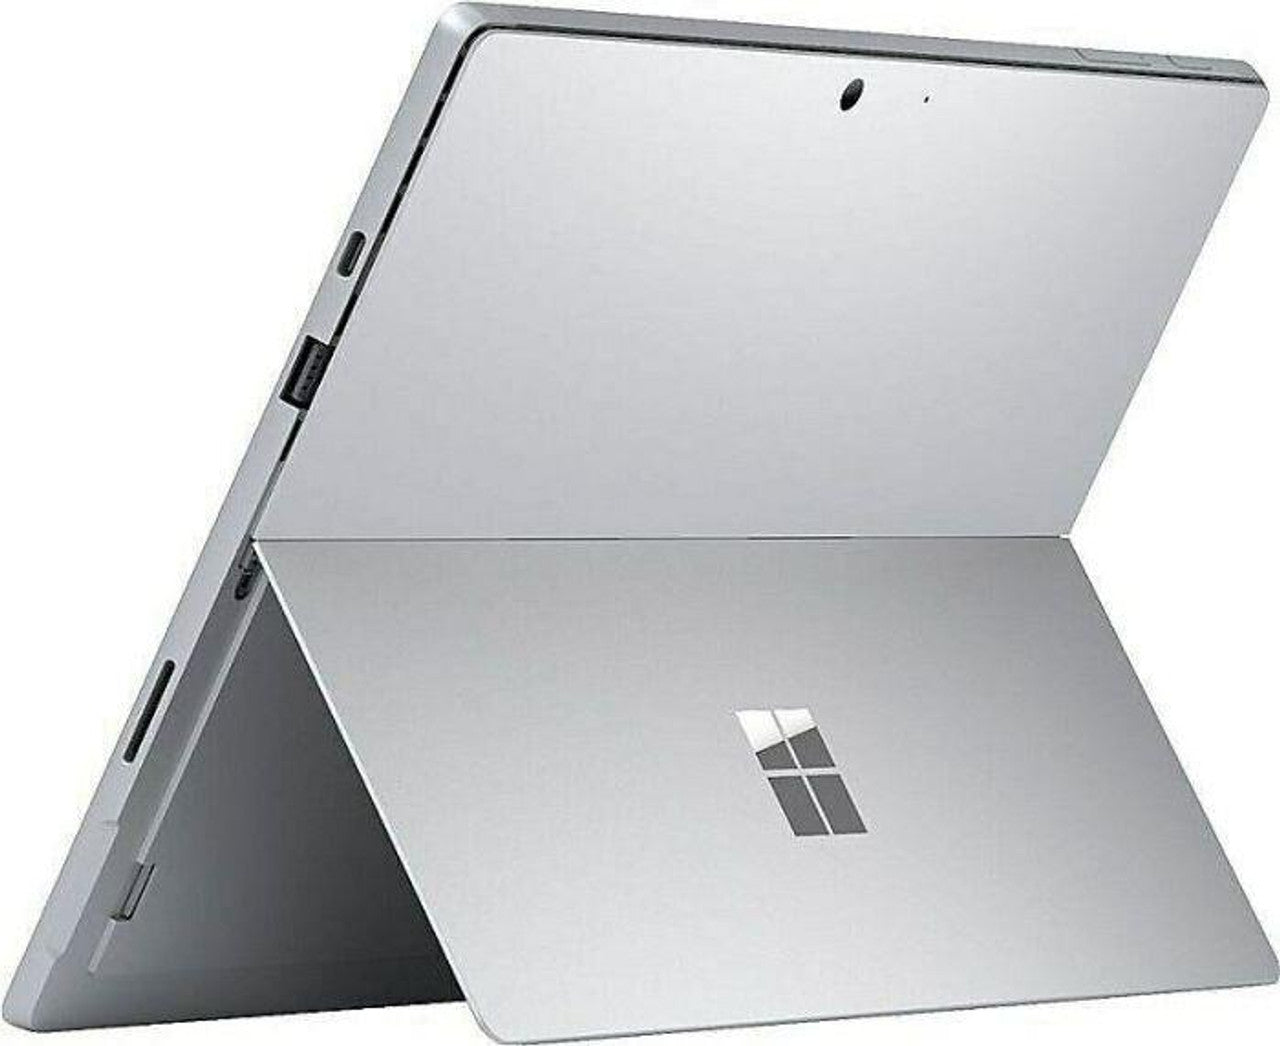 Microsoft Surface Pro 7 Intel Core i7-1065G7 16GB RAM 256GB 12.3" - Platinum - Good